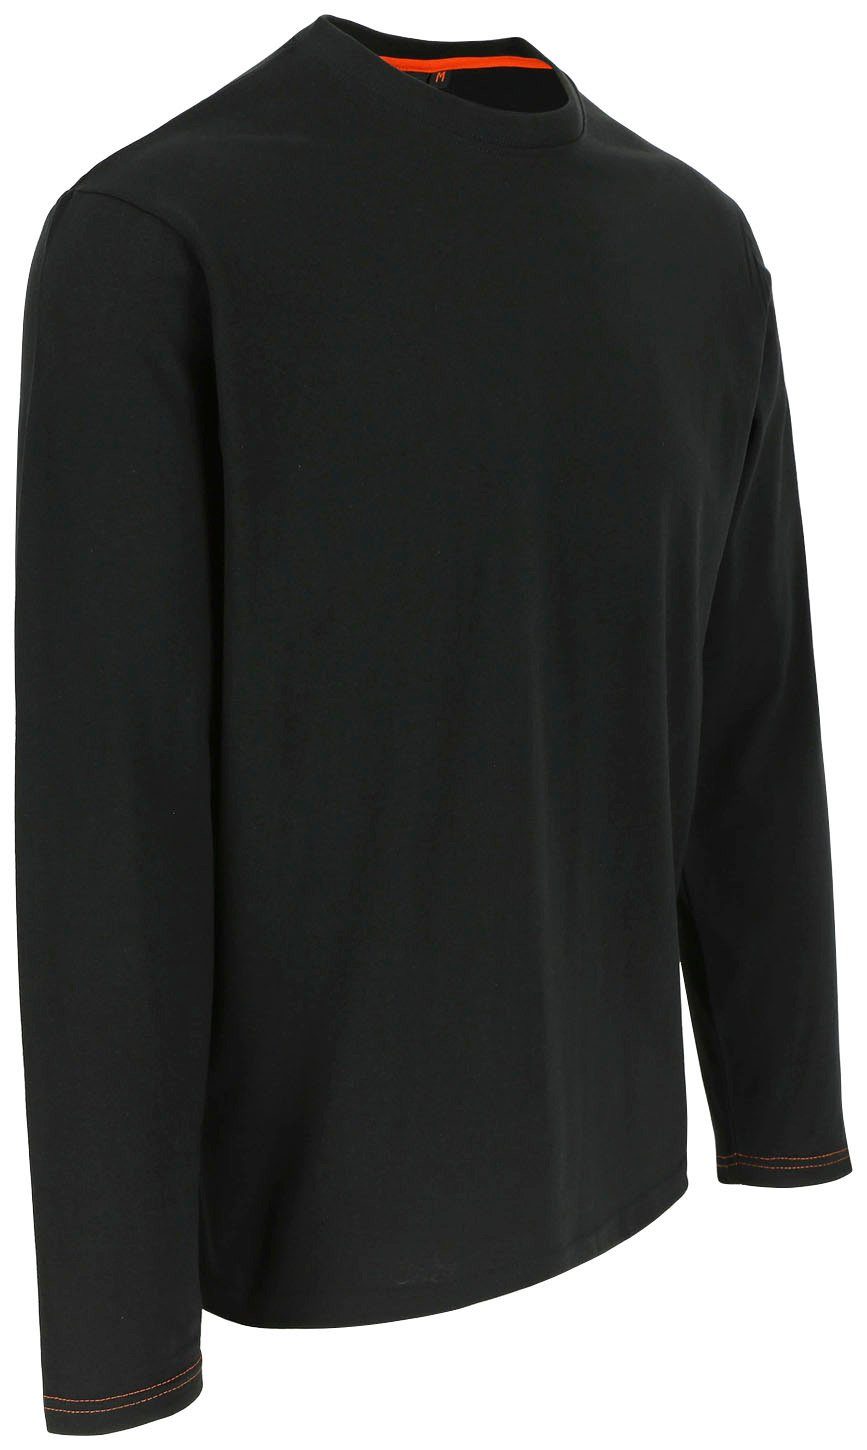 Herock Langarmshirt Basic t-shirt Noet schwarz Baumwolle, % angenehmes 100 langärmlig vorgeschrumpfte Tragegefühl,